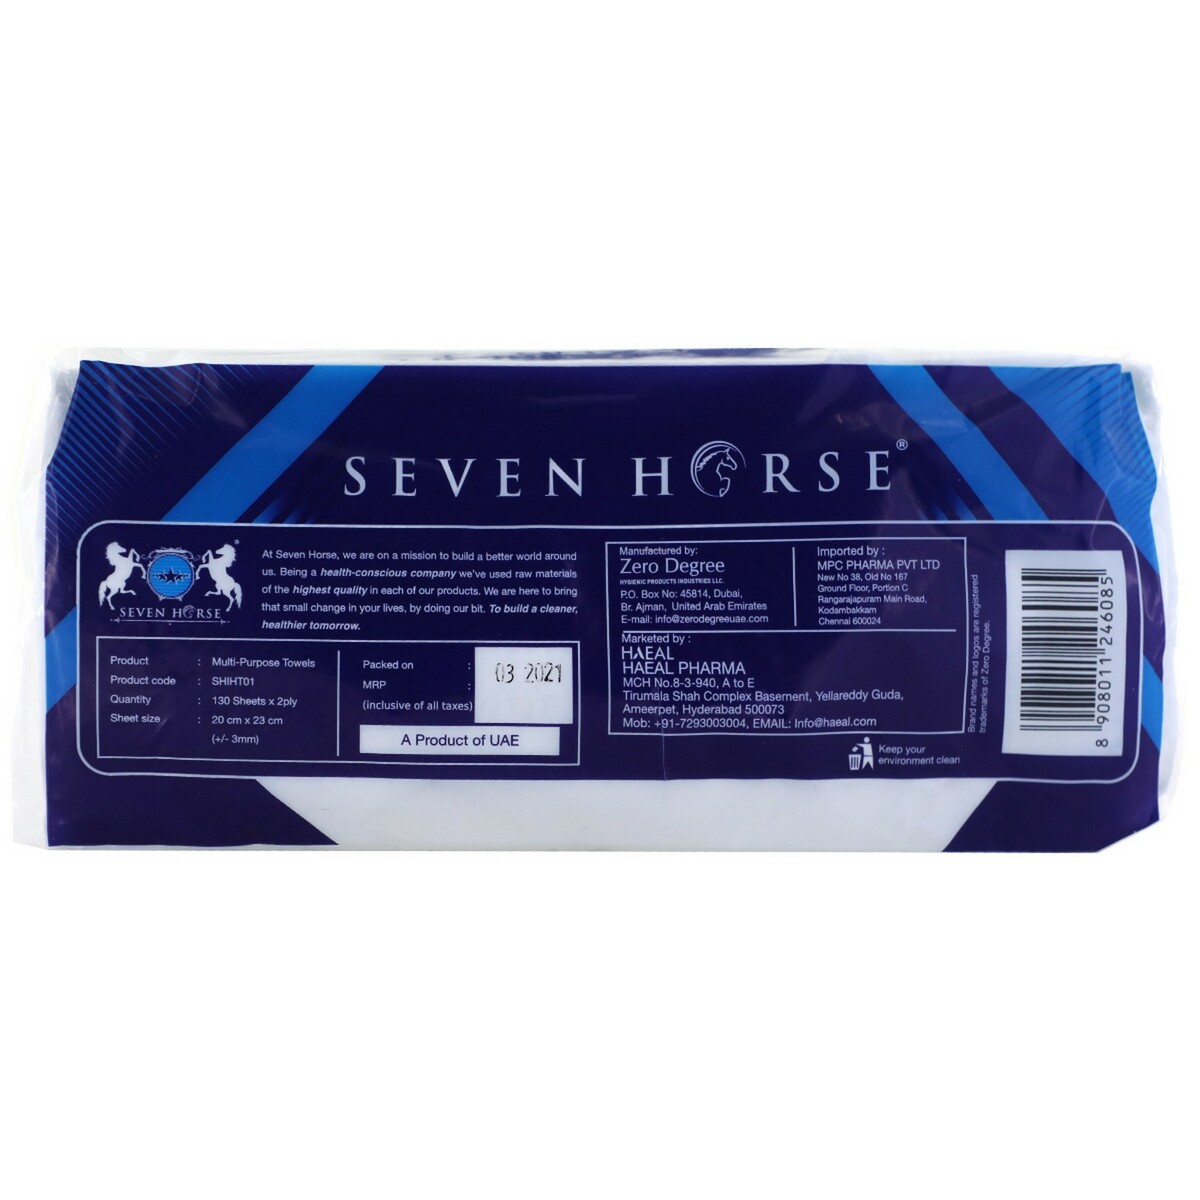 Seven Horse Kitchen Towel Fold 2PLY 20x23cm 130s